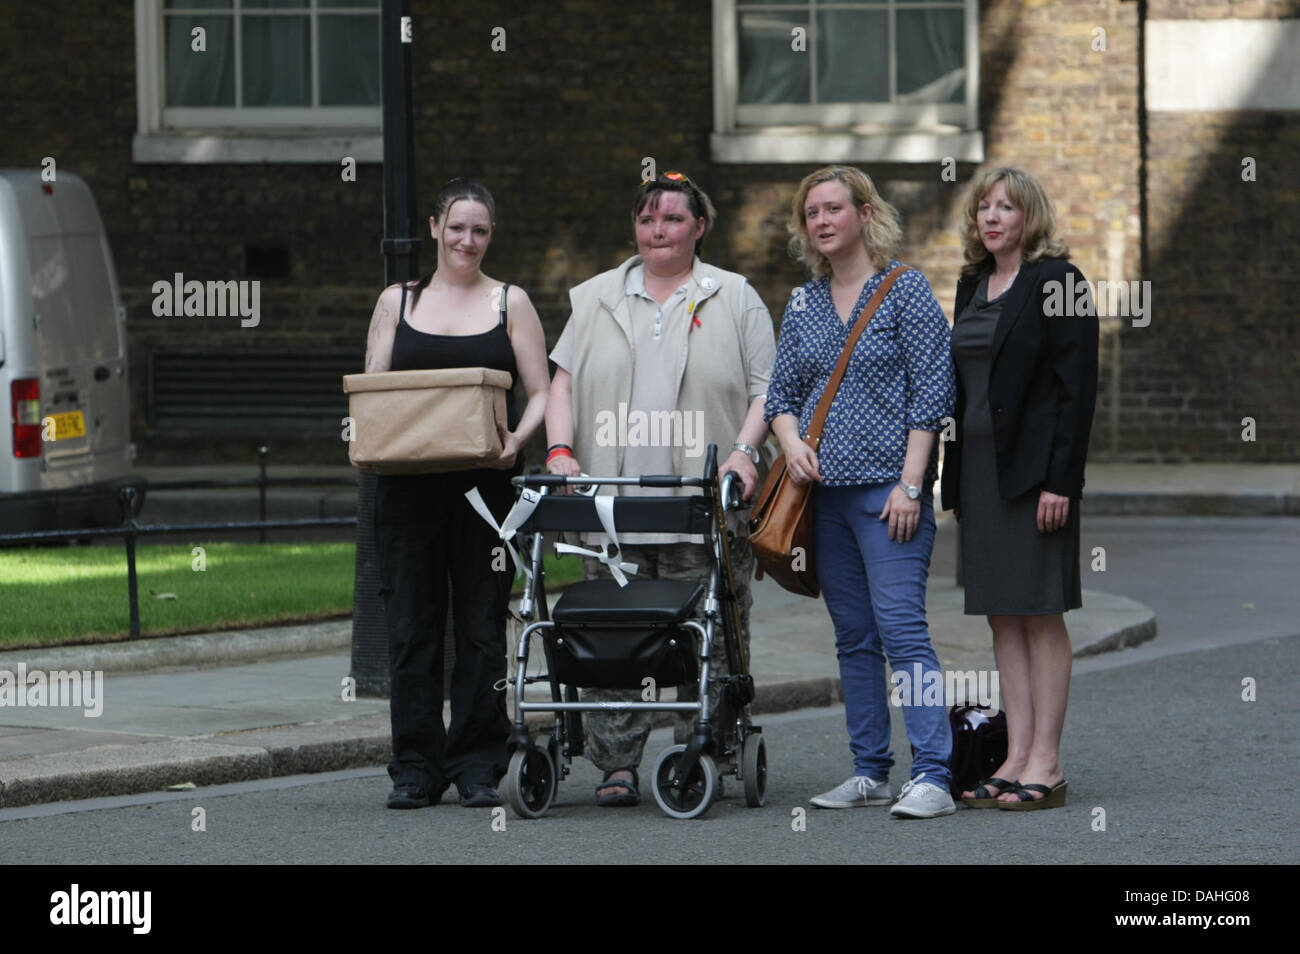 London, UK. 13. Juli 2013. Links nach rechts: Jessica Mccarnun, Paula Peters, ein Reporter und Theresa Cole in der Downing Street, die hand in der Petition an die Schlafzimmer Steuer abzuschaffen. London, UK, 13. Juli 2013 Credit: Martyn Wheatley/Alamy Live News Stockfoto